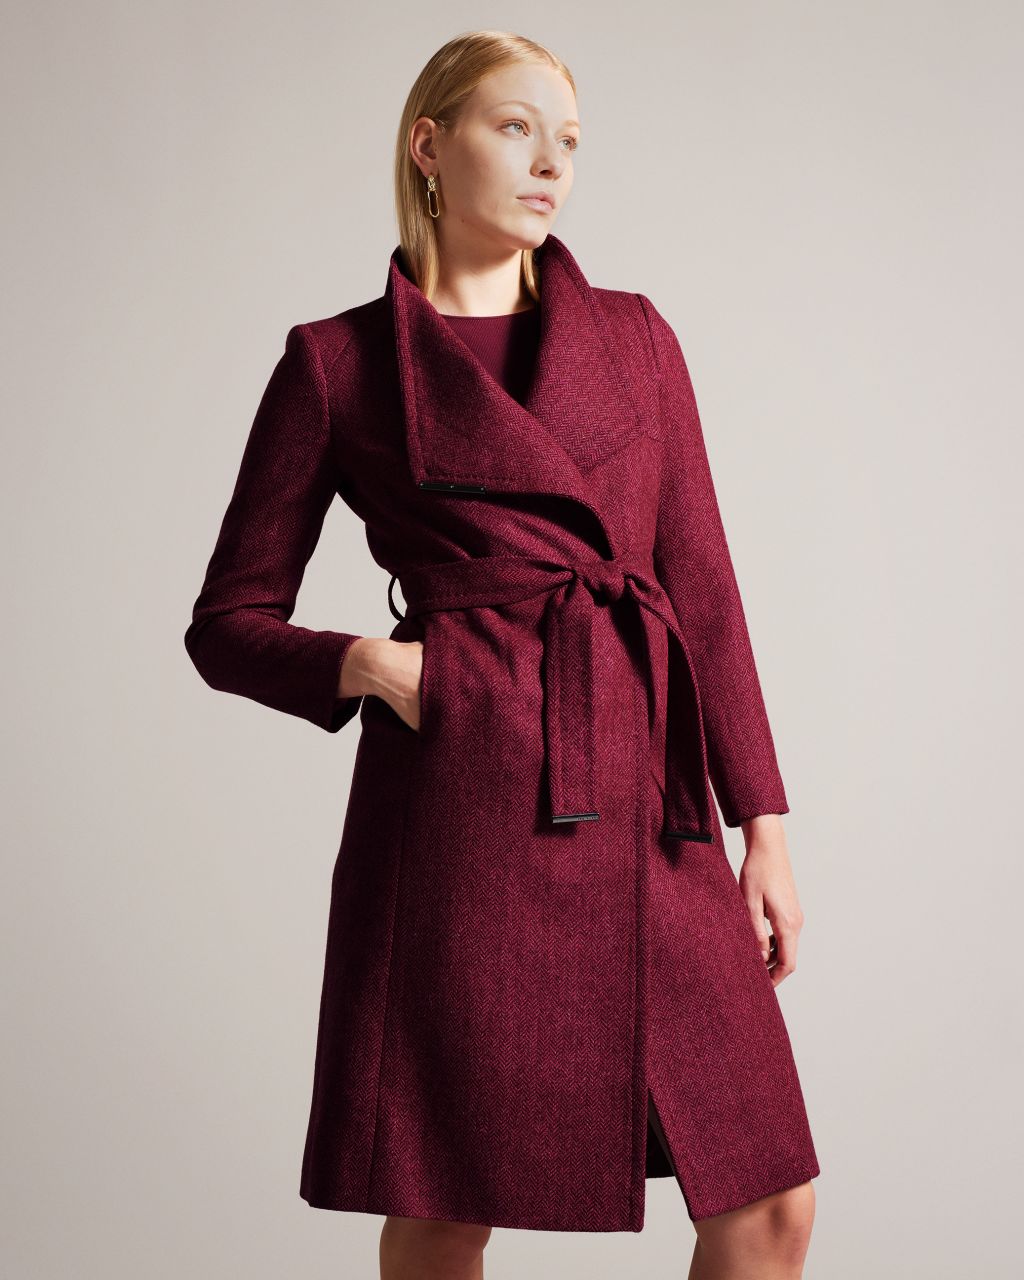 Women's Herringbone Wool Wrap Coat in Bright Pink, Roseane product